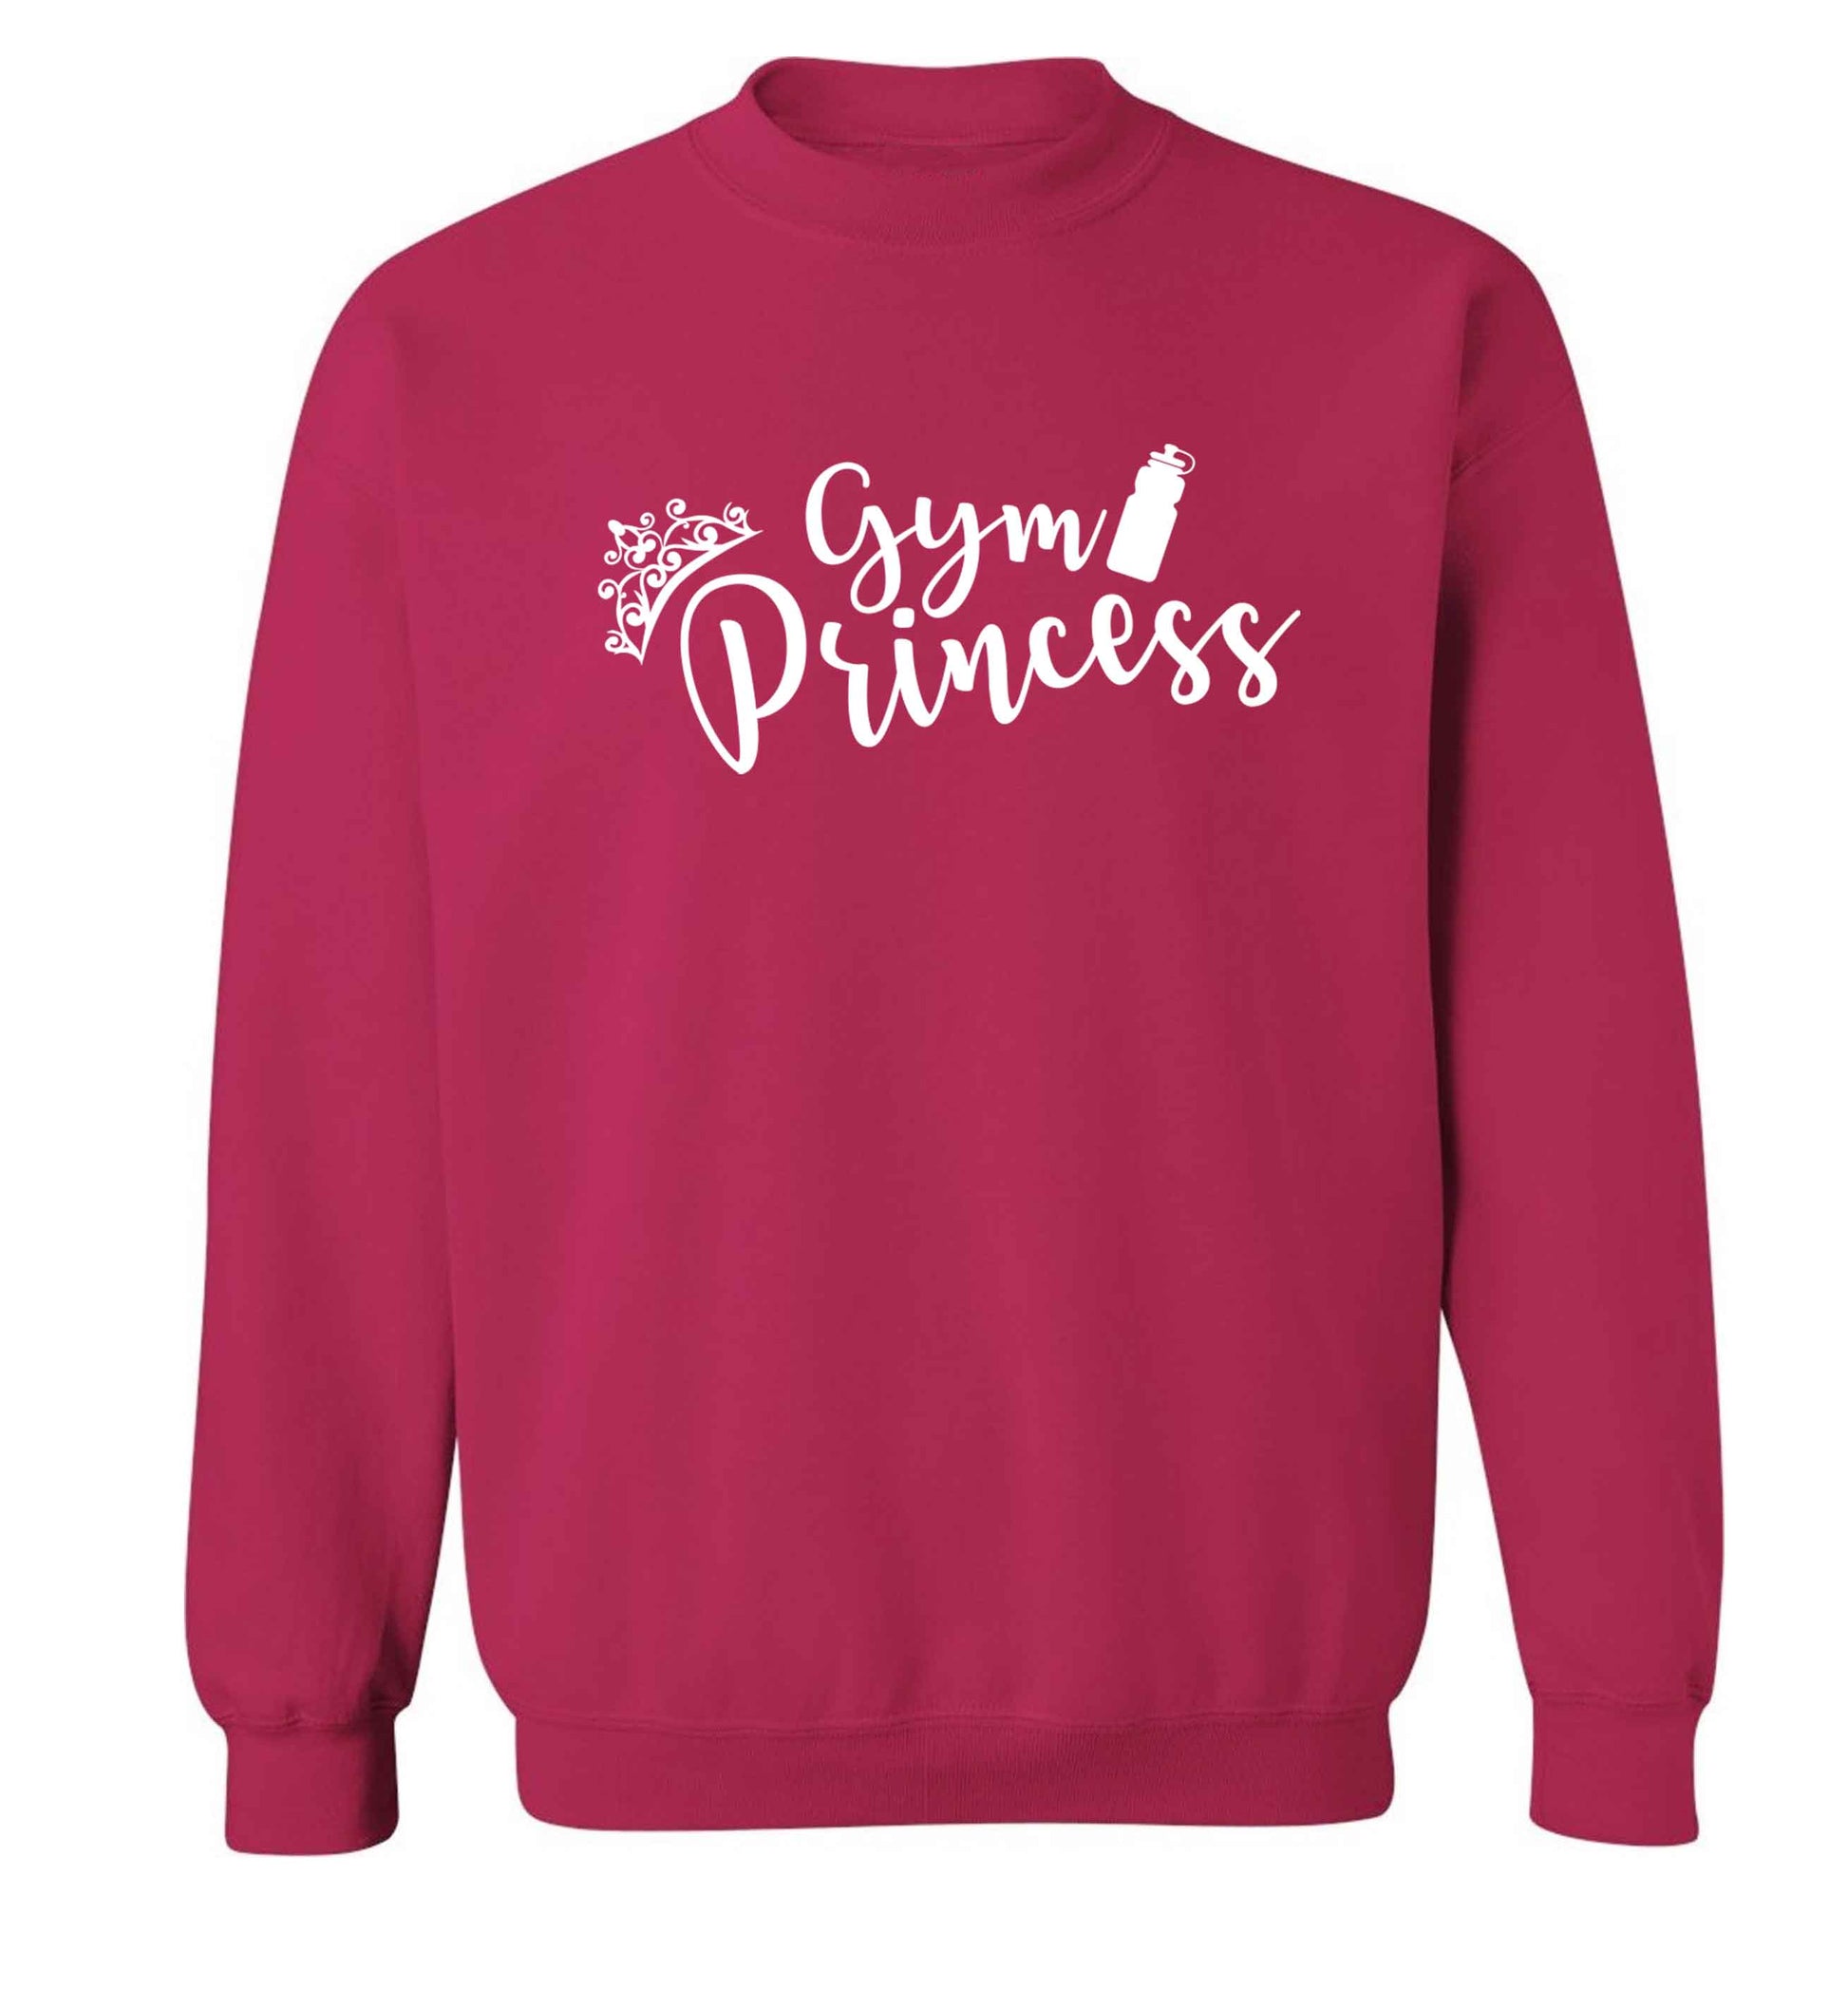 Gym princess Adult's unisex pink Sweater 2XL